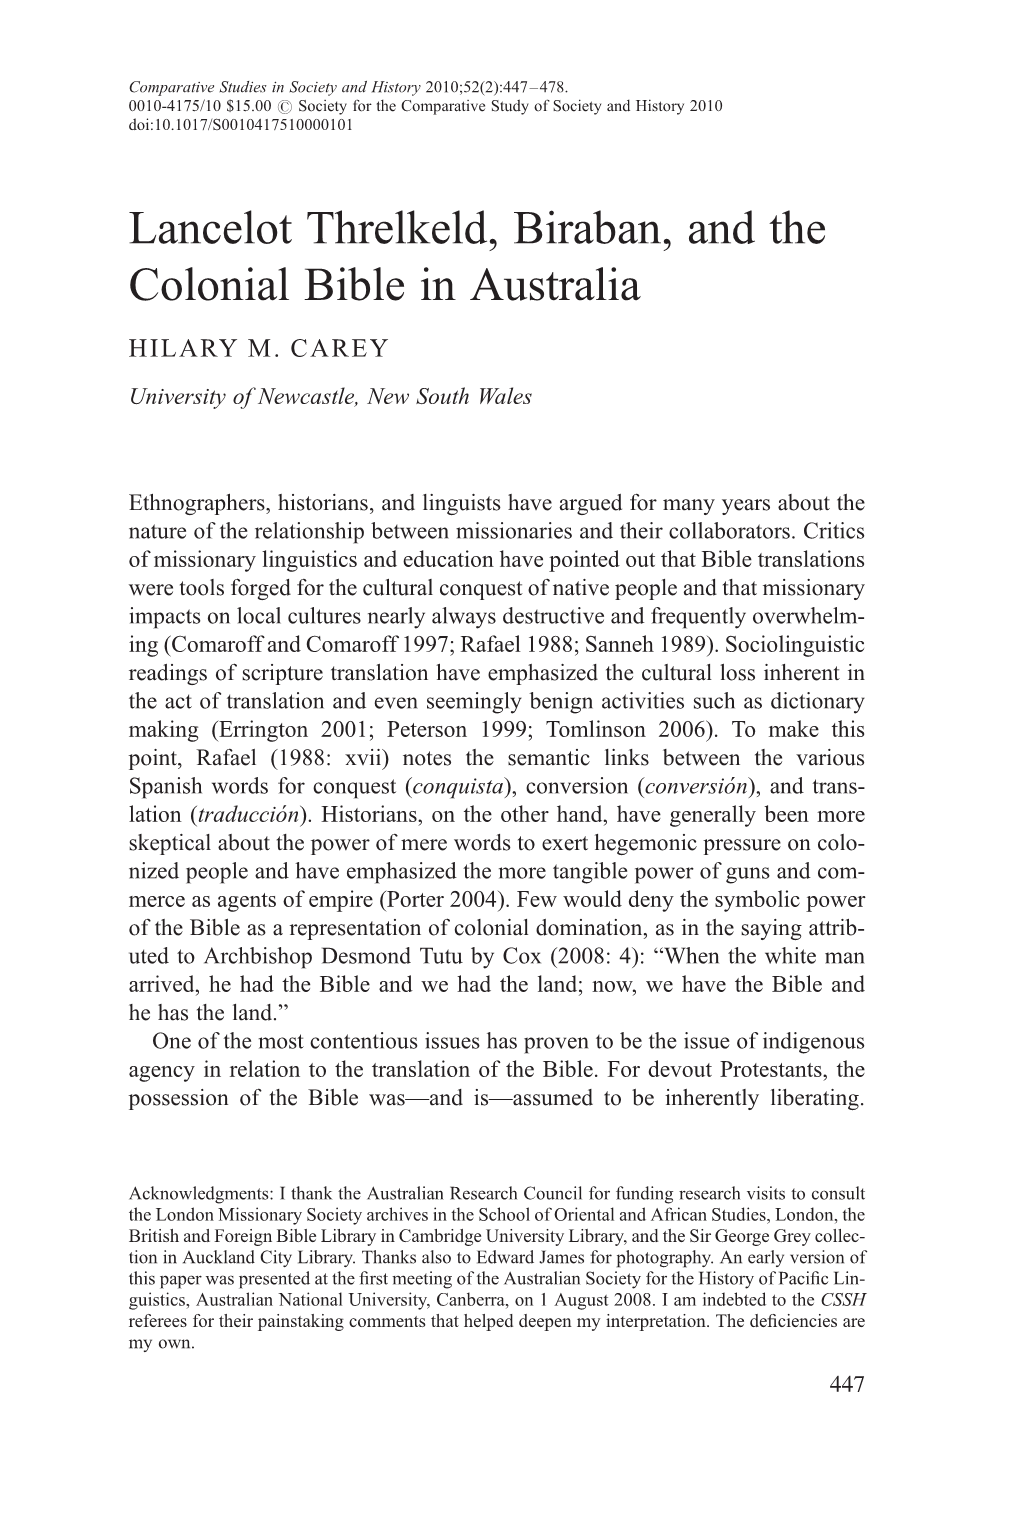 Lancelot Threlkeld, Biraban, and the Colonial Bible in Australia